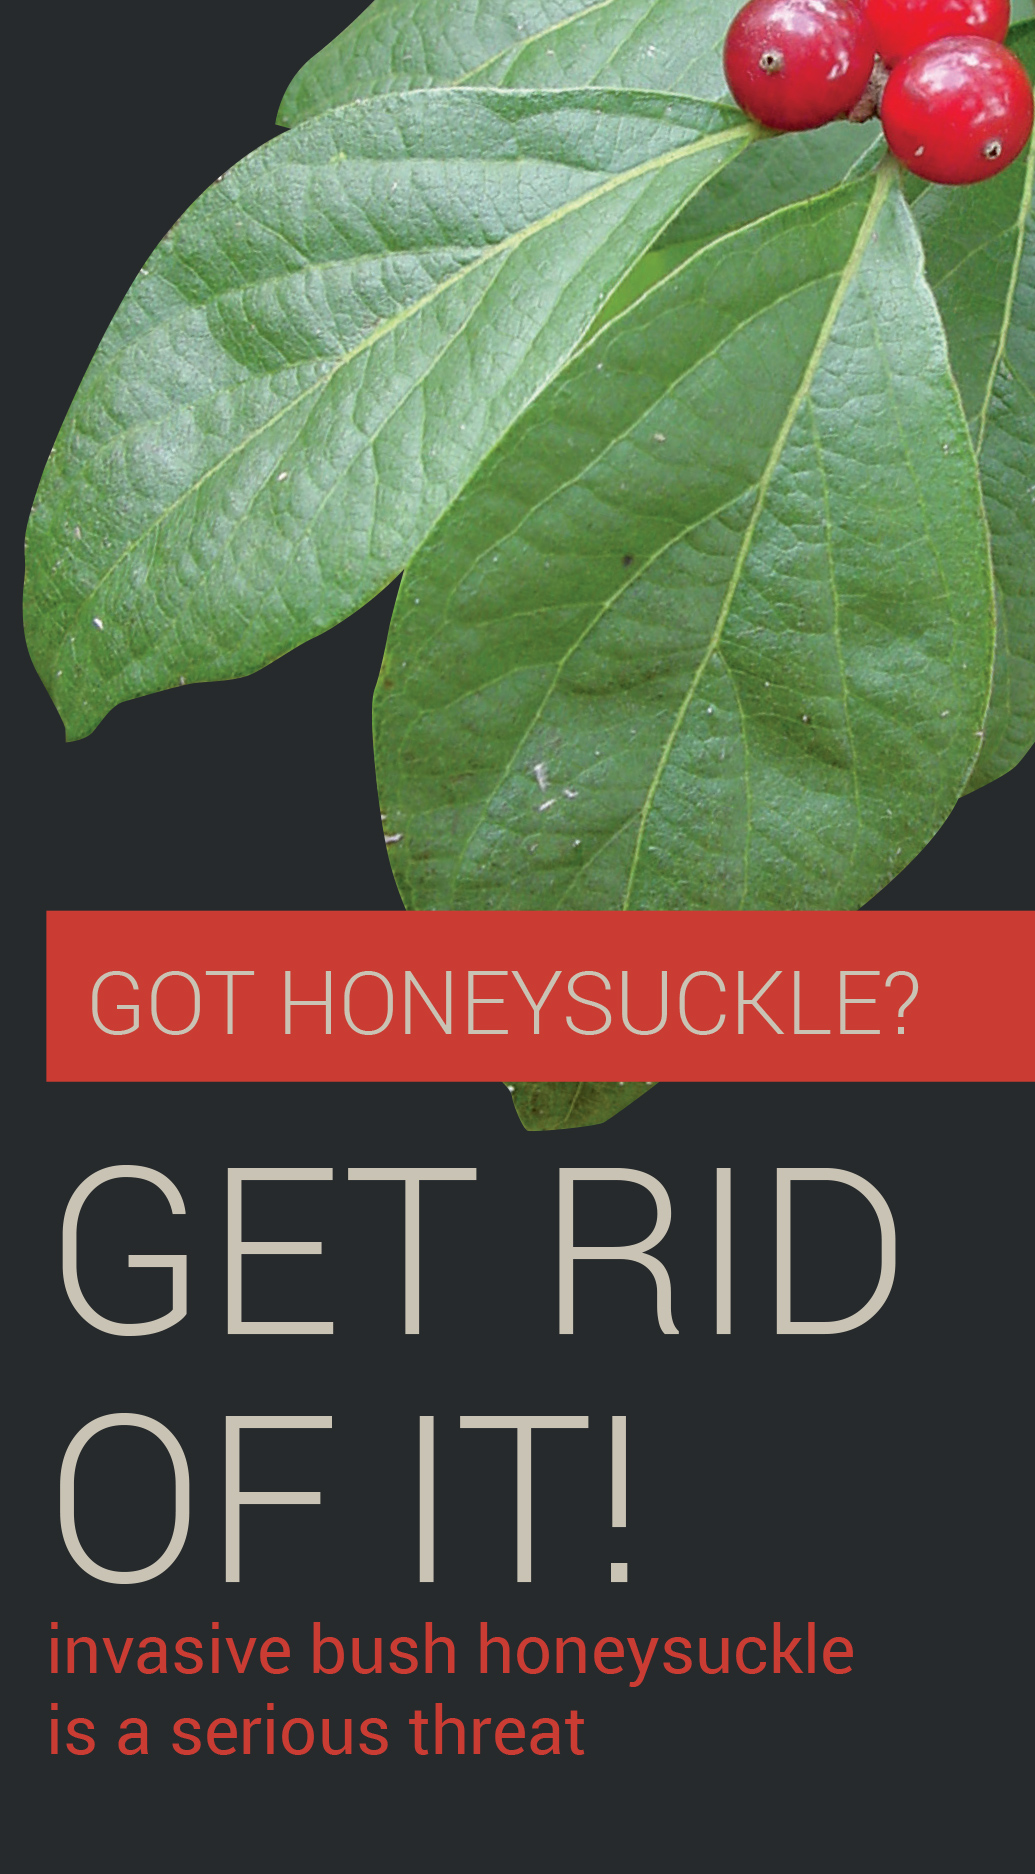 Many honeysuckle plants have toxic berries